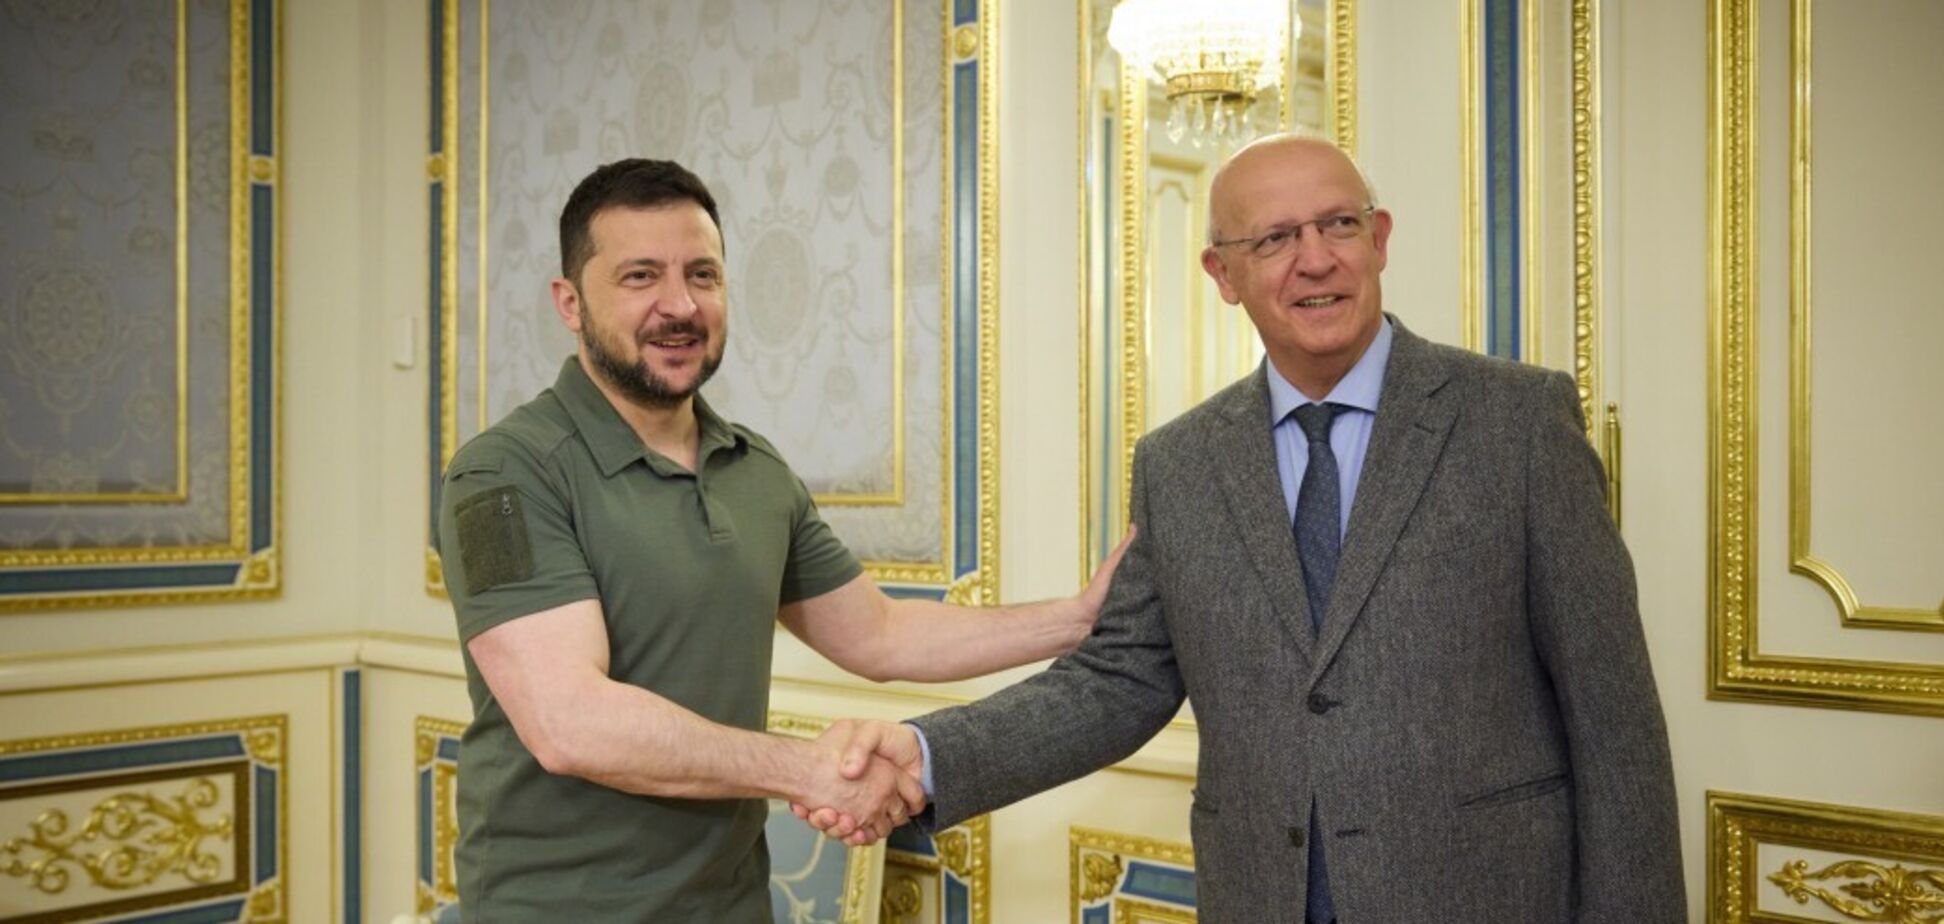 Обсудили интеграцию Украины в НАТО и ЕС: Зеленский встретился с главой парламента Португалии. Фото и видео